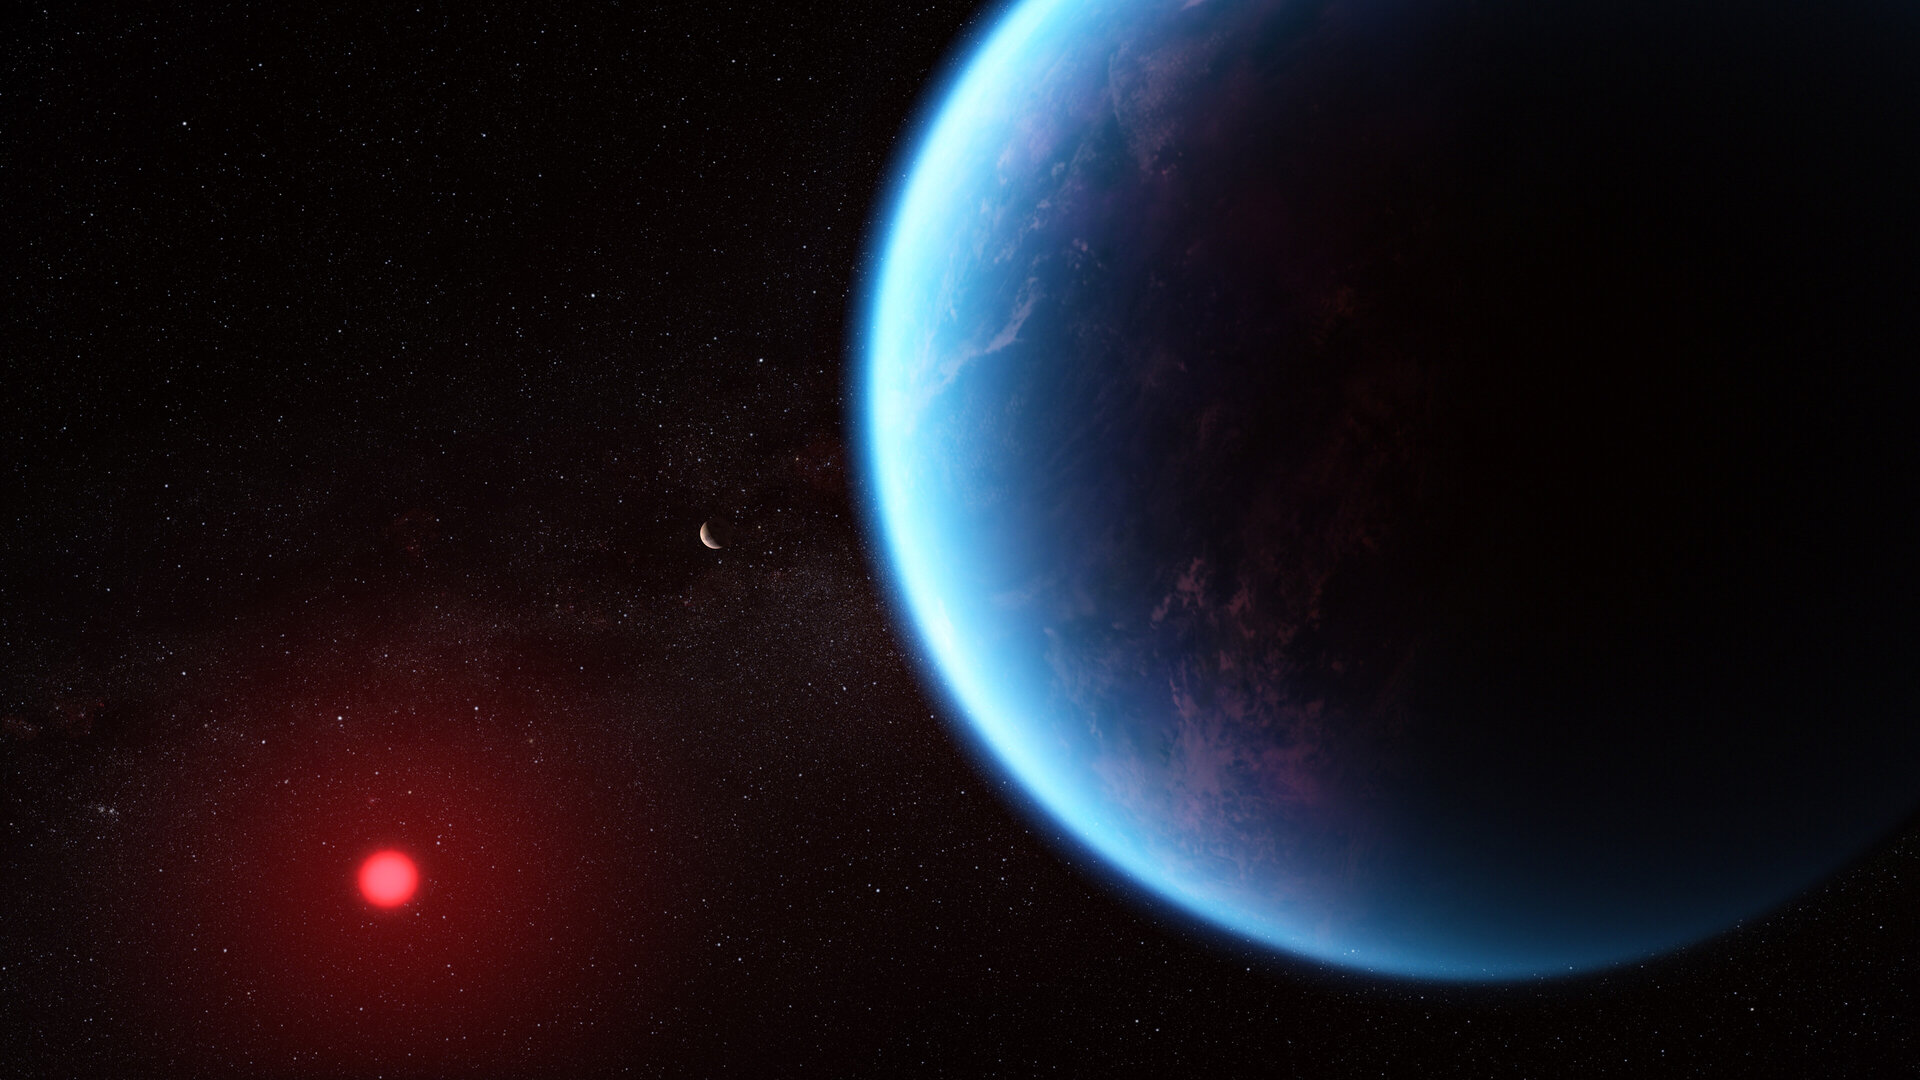 Exoplanet K2-18 b (Illustration)